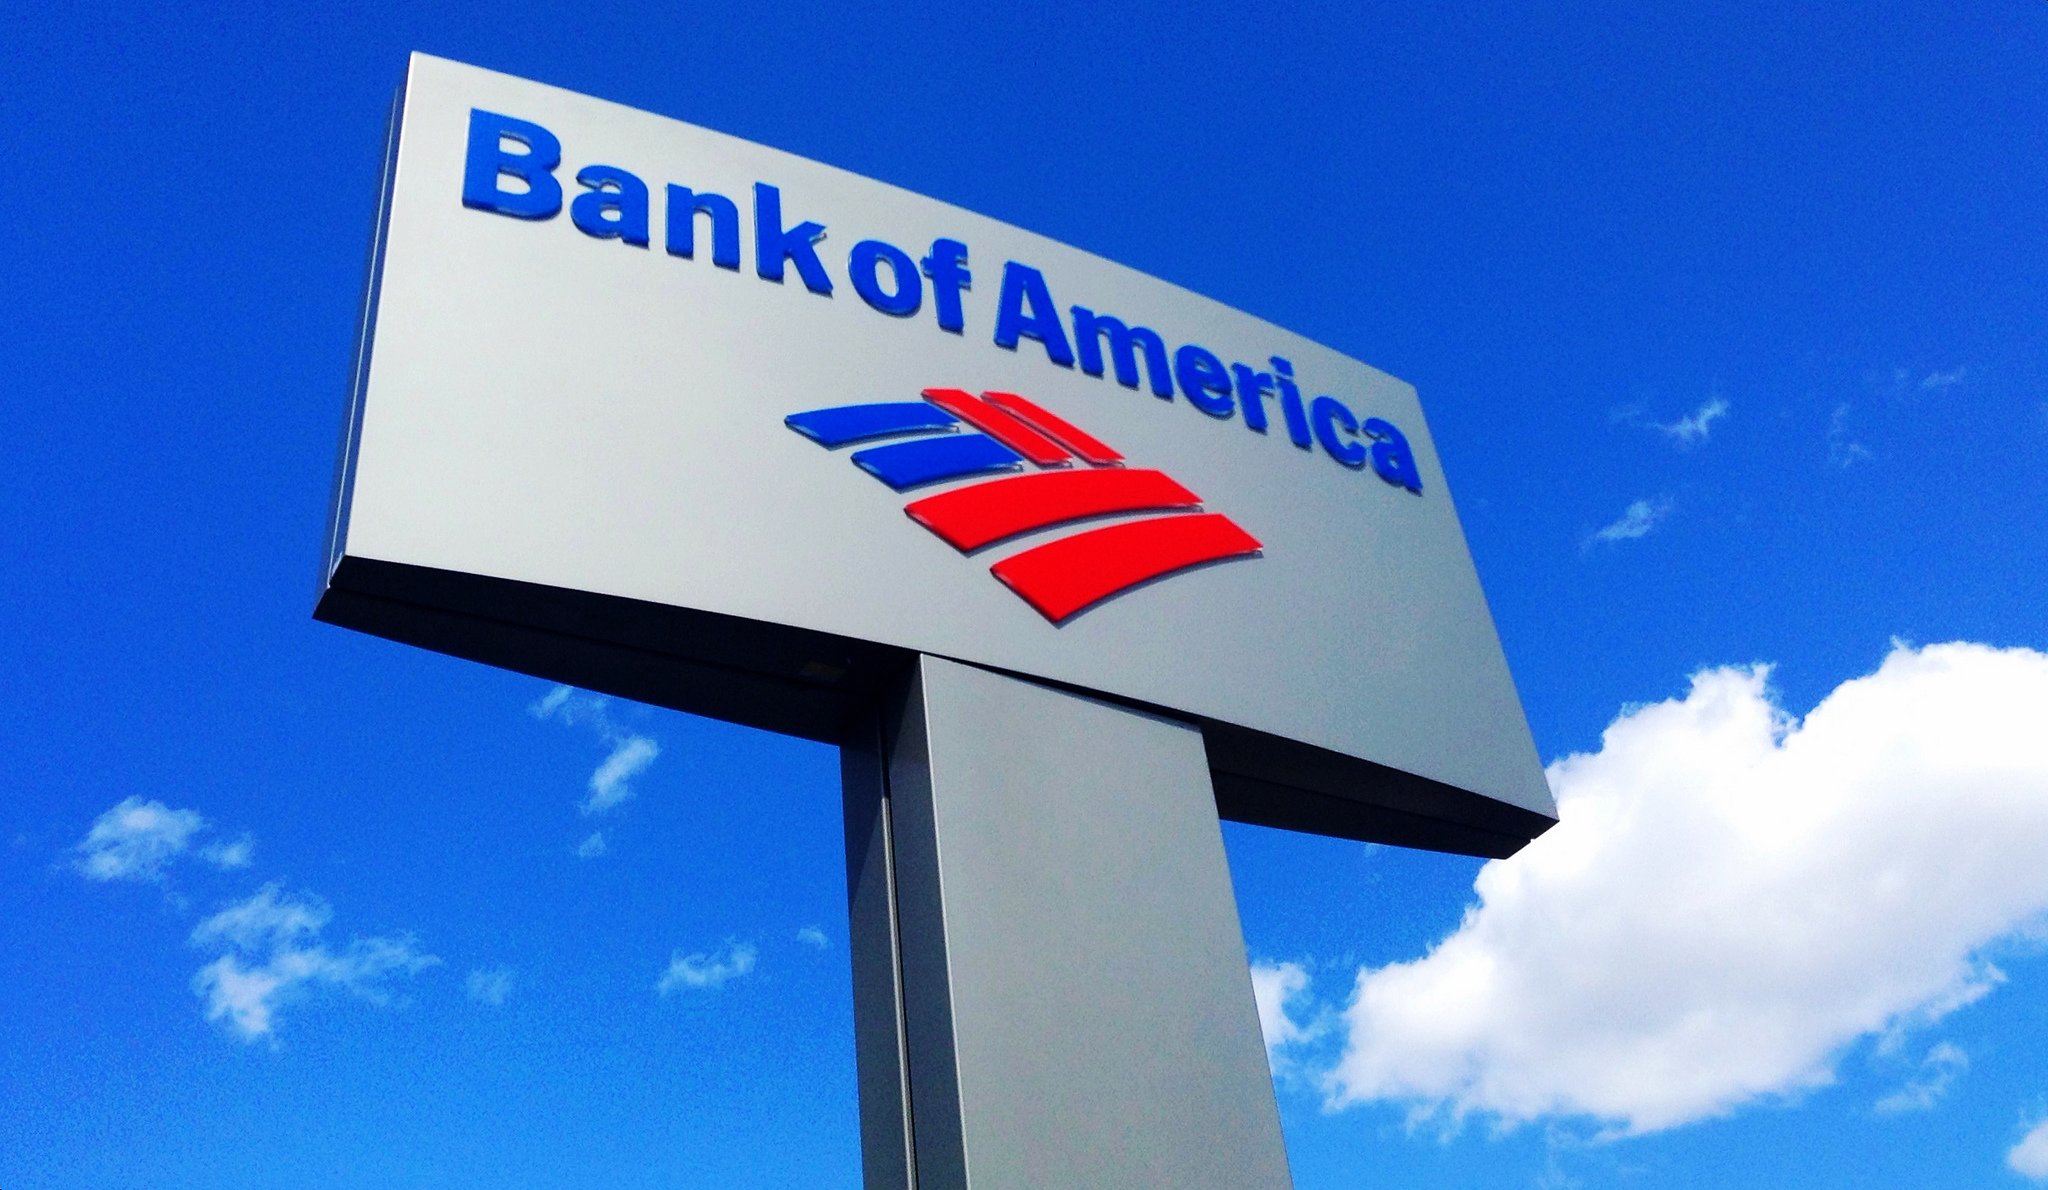 bank of america